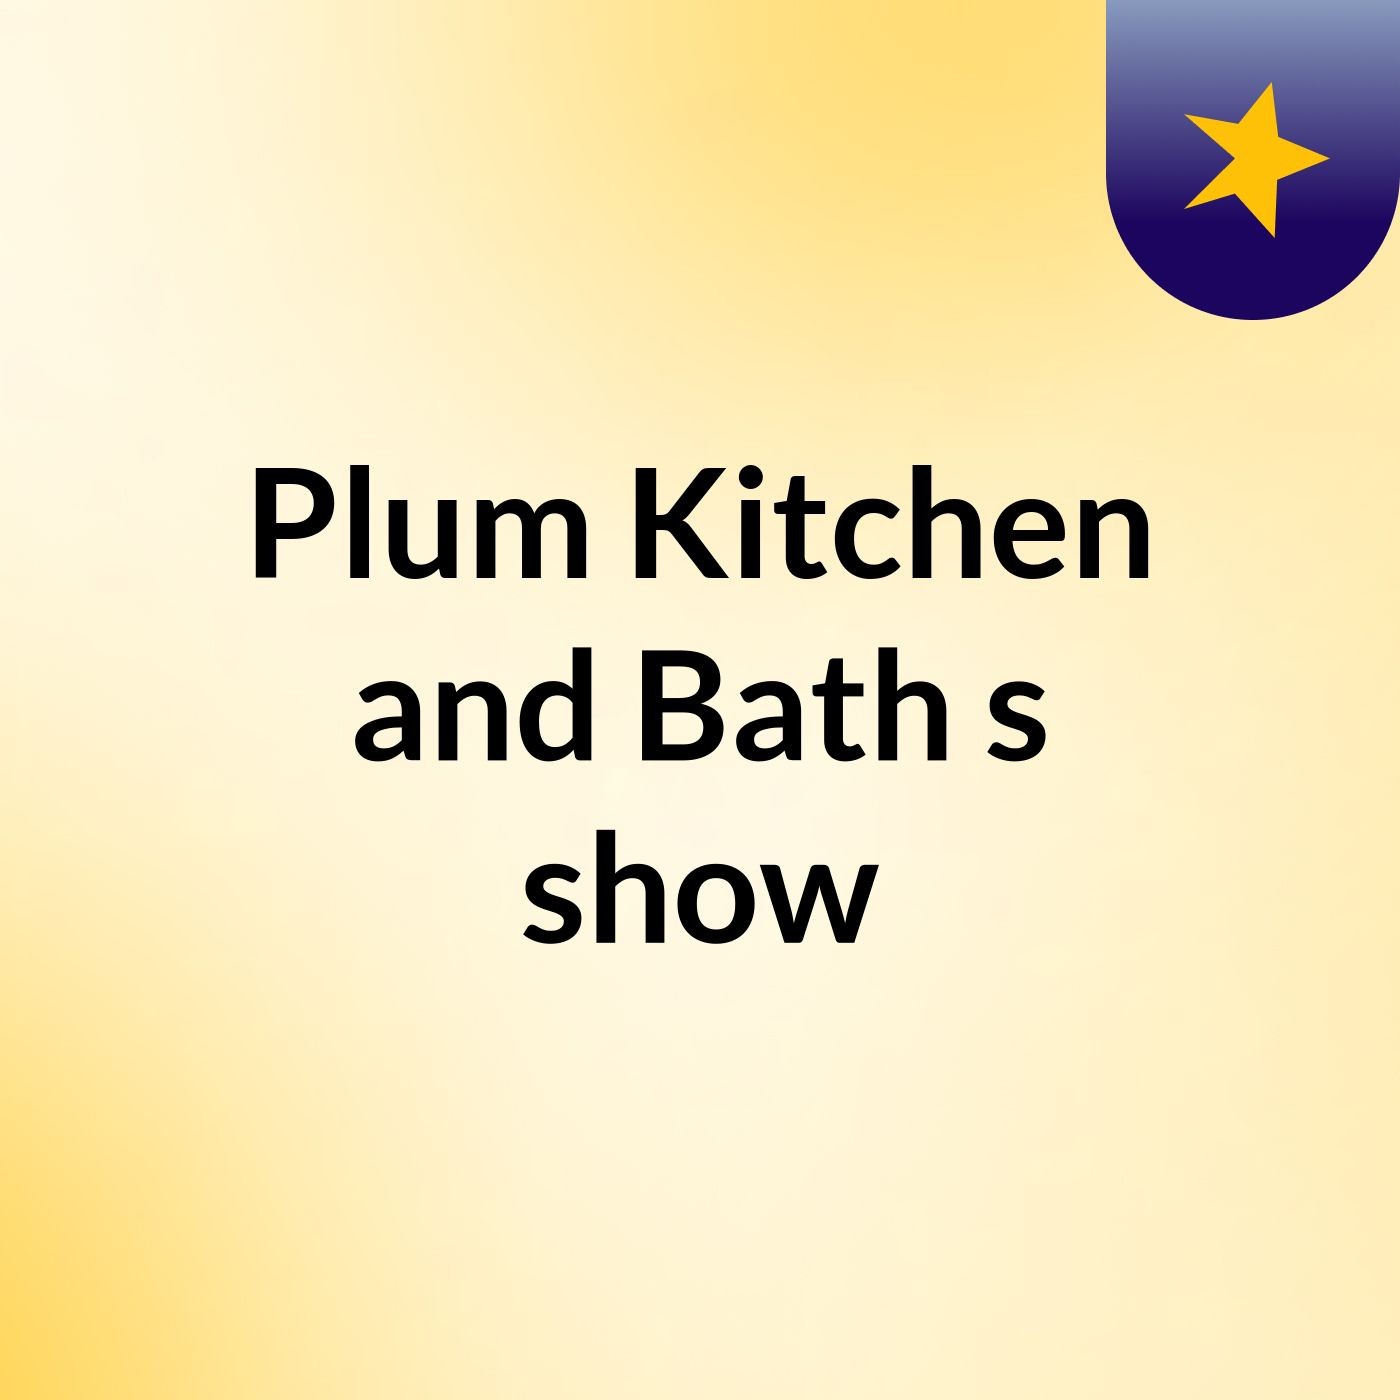 Plum Kitchen and Bath's show